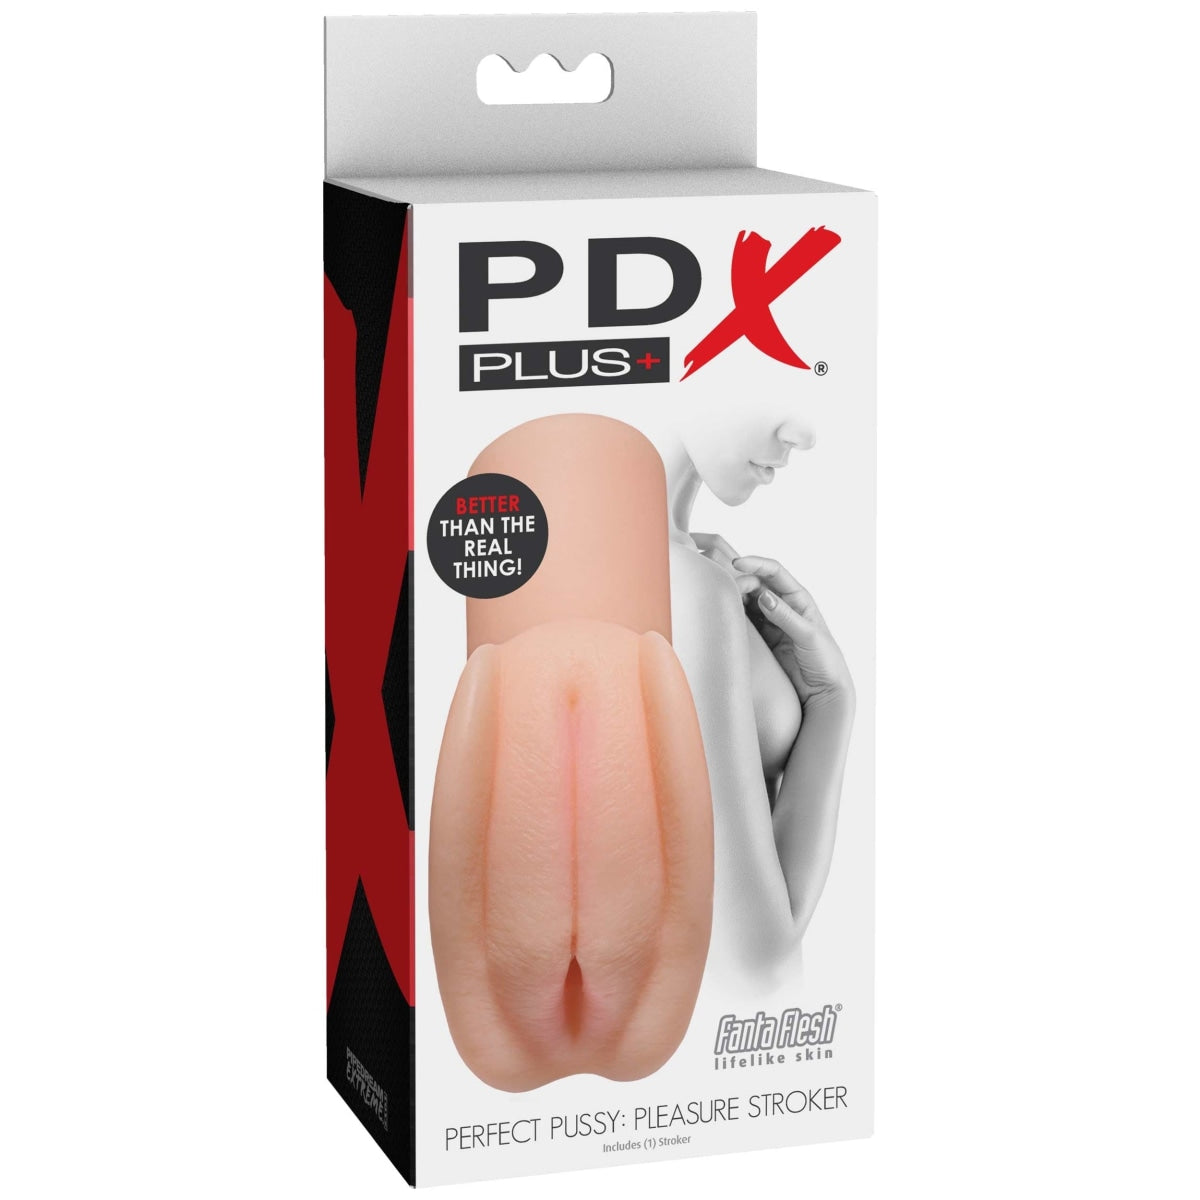 Pdx Plus Pleasure Stroker Intimates Adult Boutique